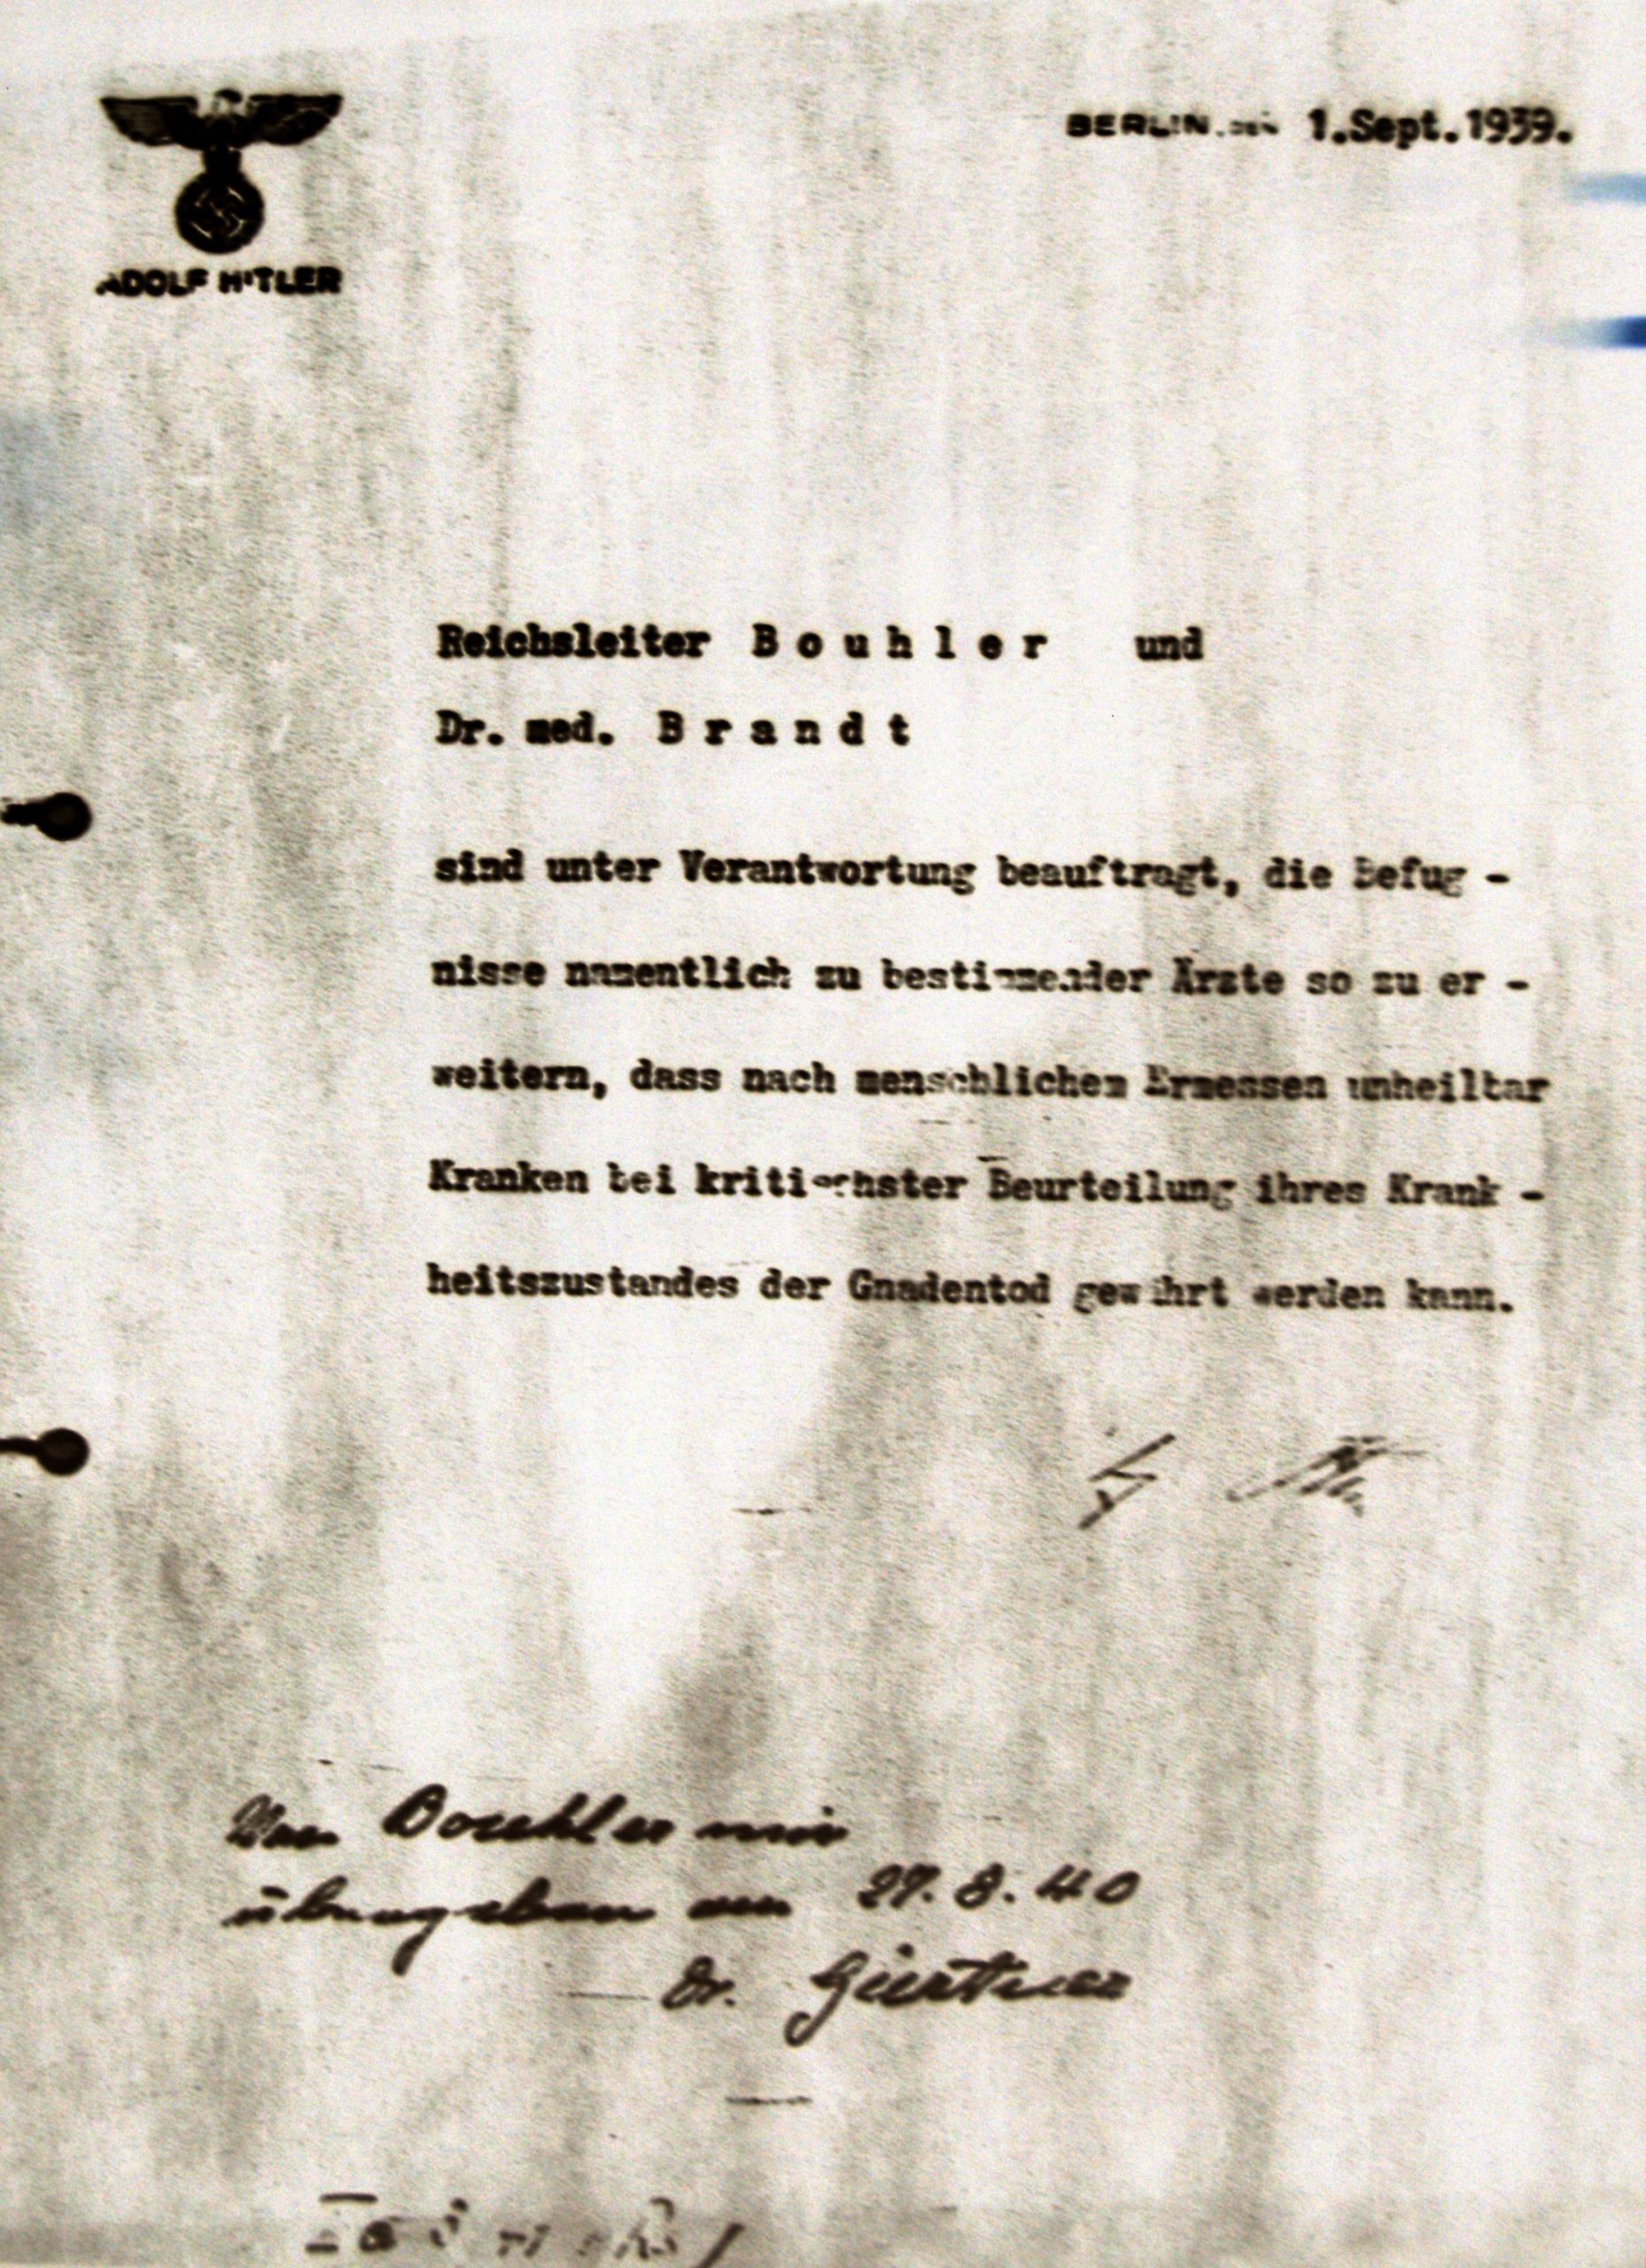 Photo of The "euthanasia" authorization signed by Adolf Hitler